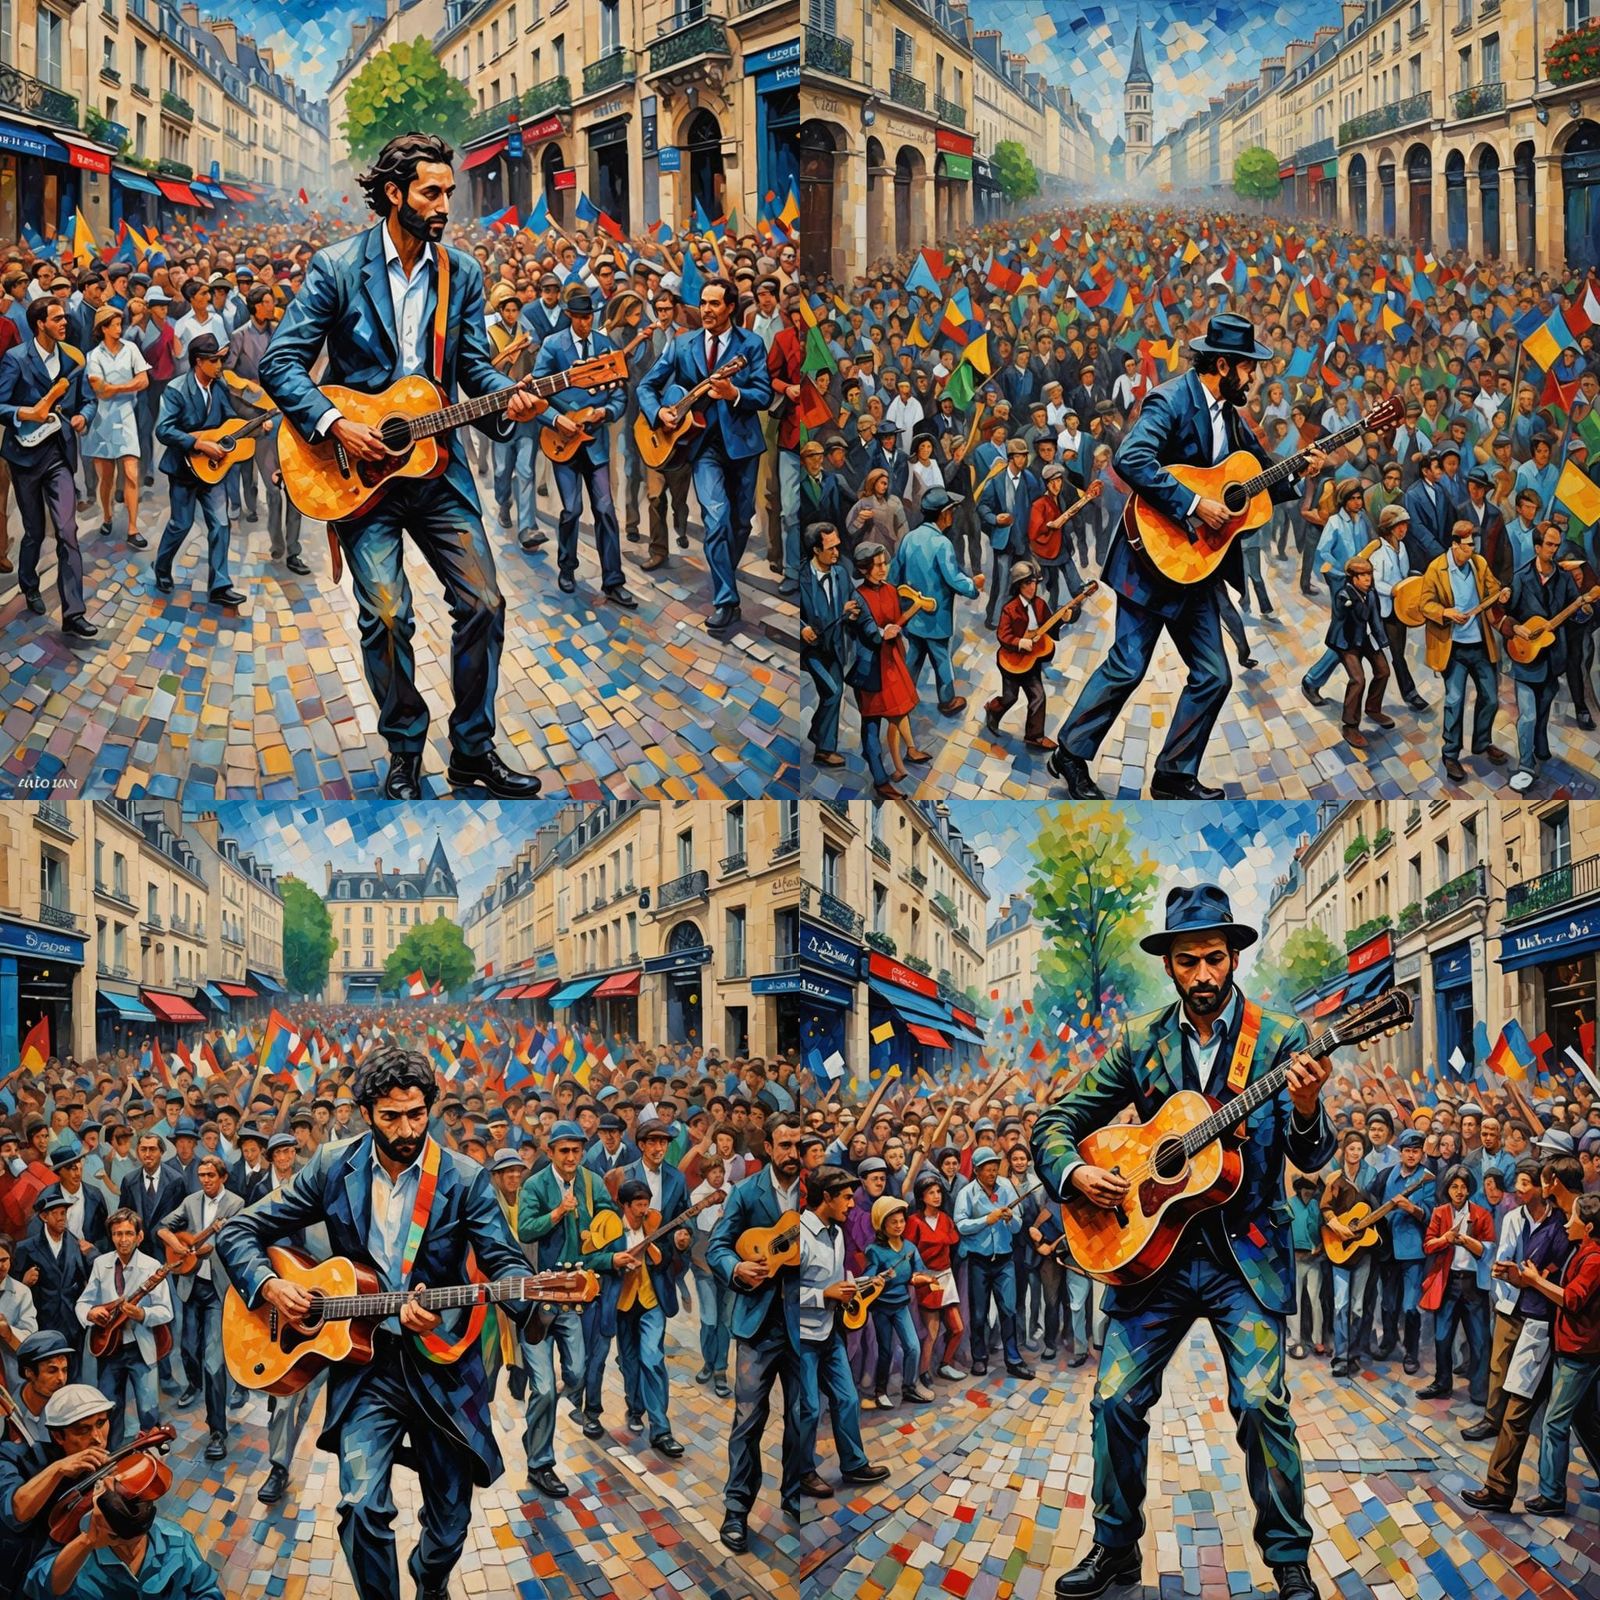 Damien Saez is a revolutionary guitarist, leading the crowd towards Mairie de Paris, during olympic games